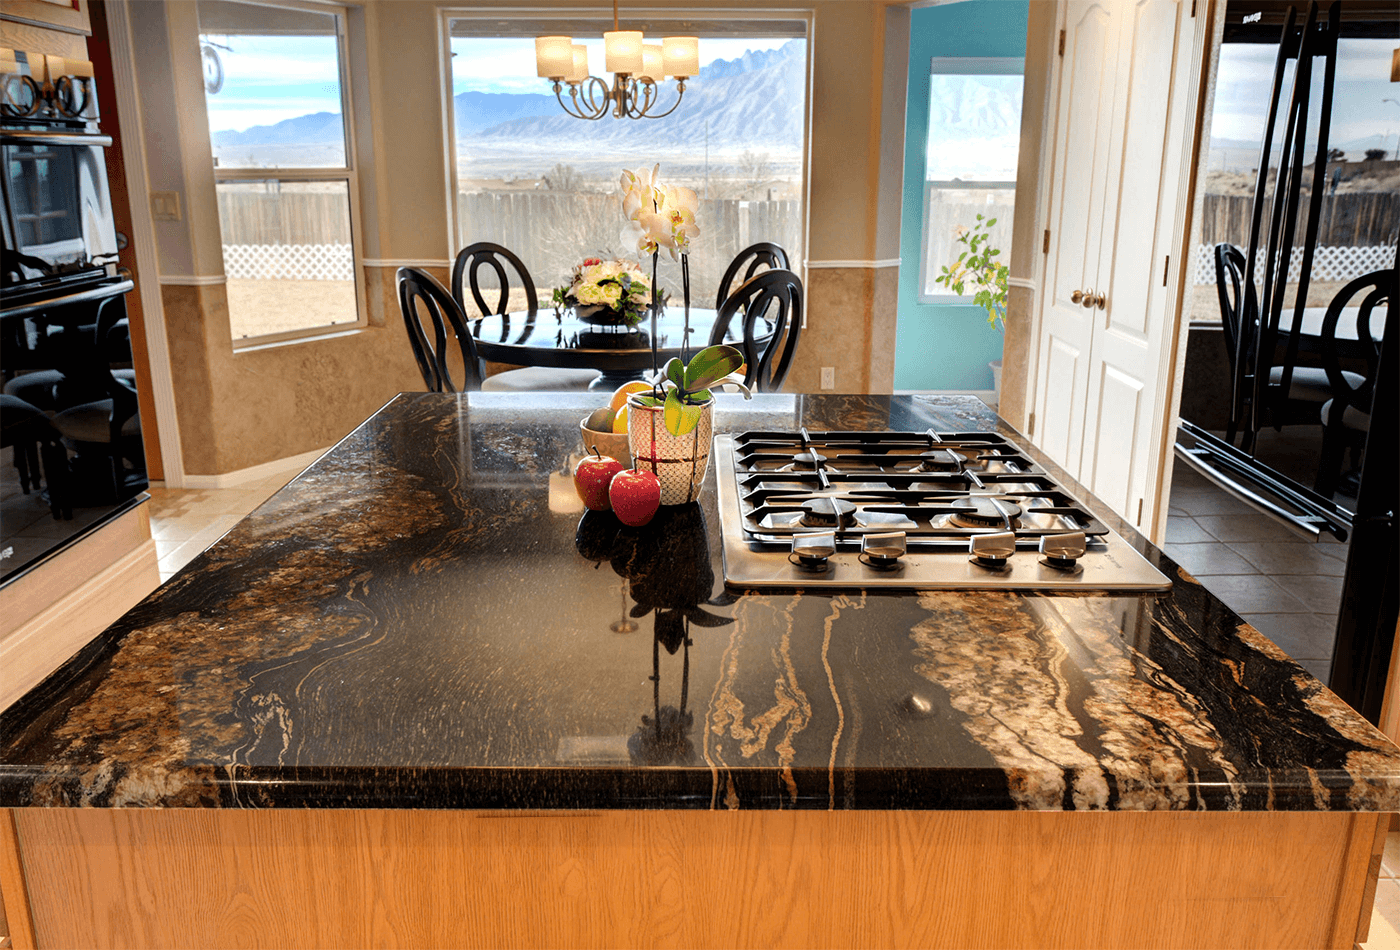 Stunning Black and Gold Kitchen Worktops; Upgrade Now!